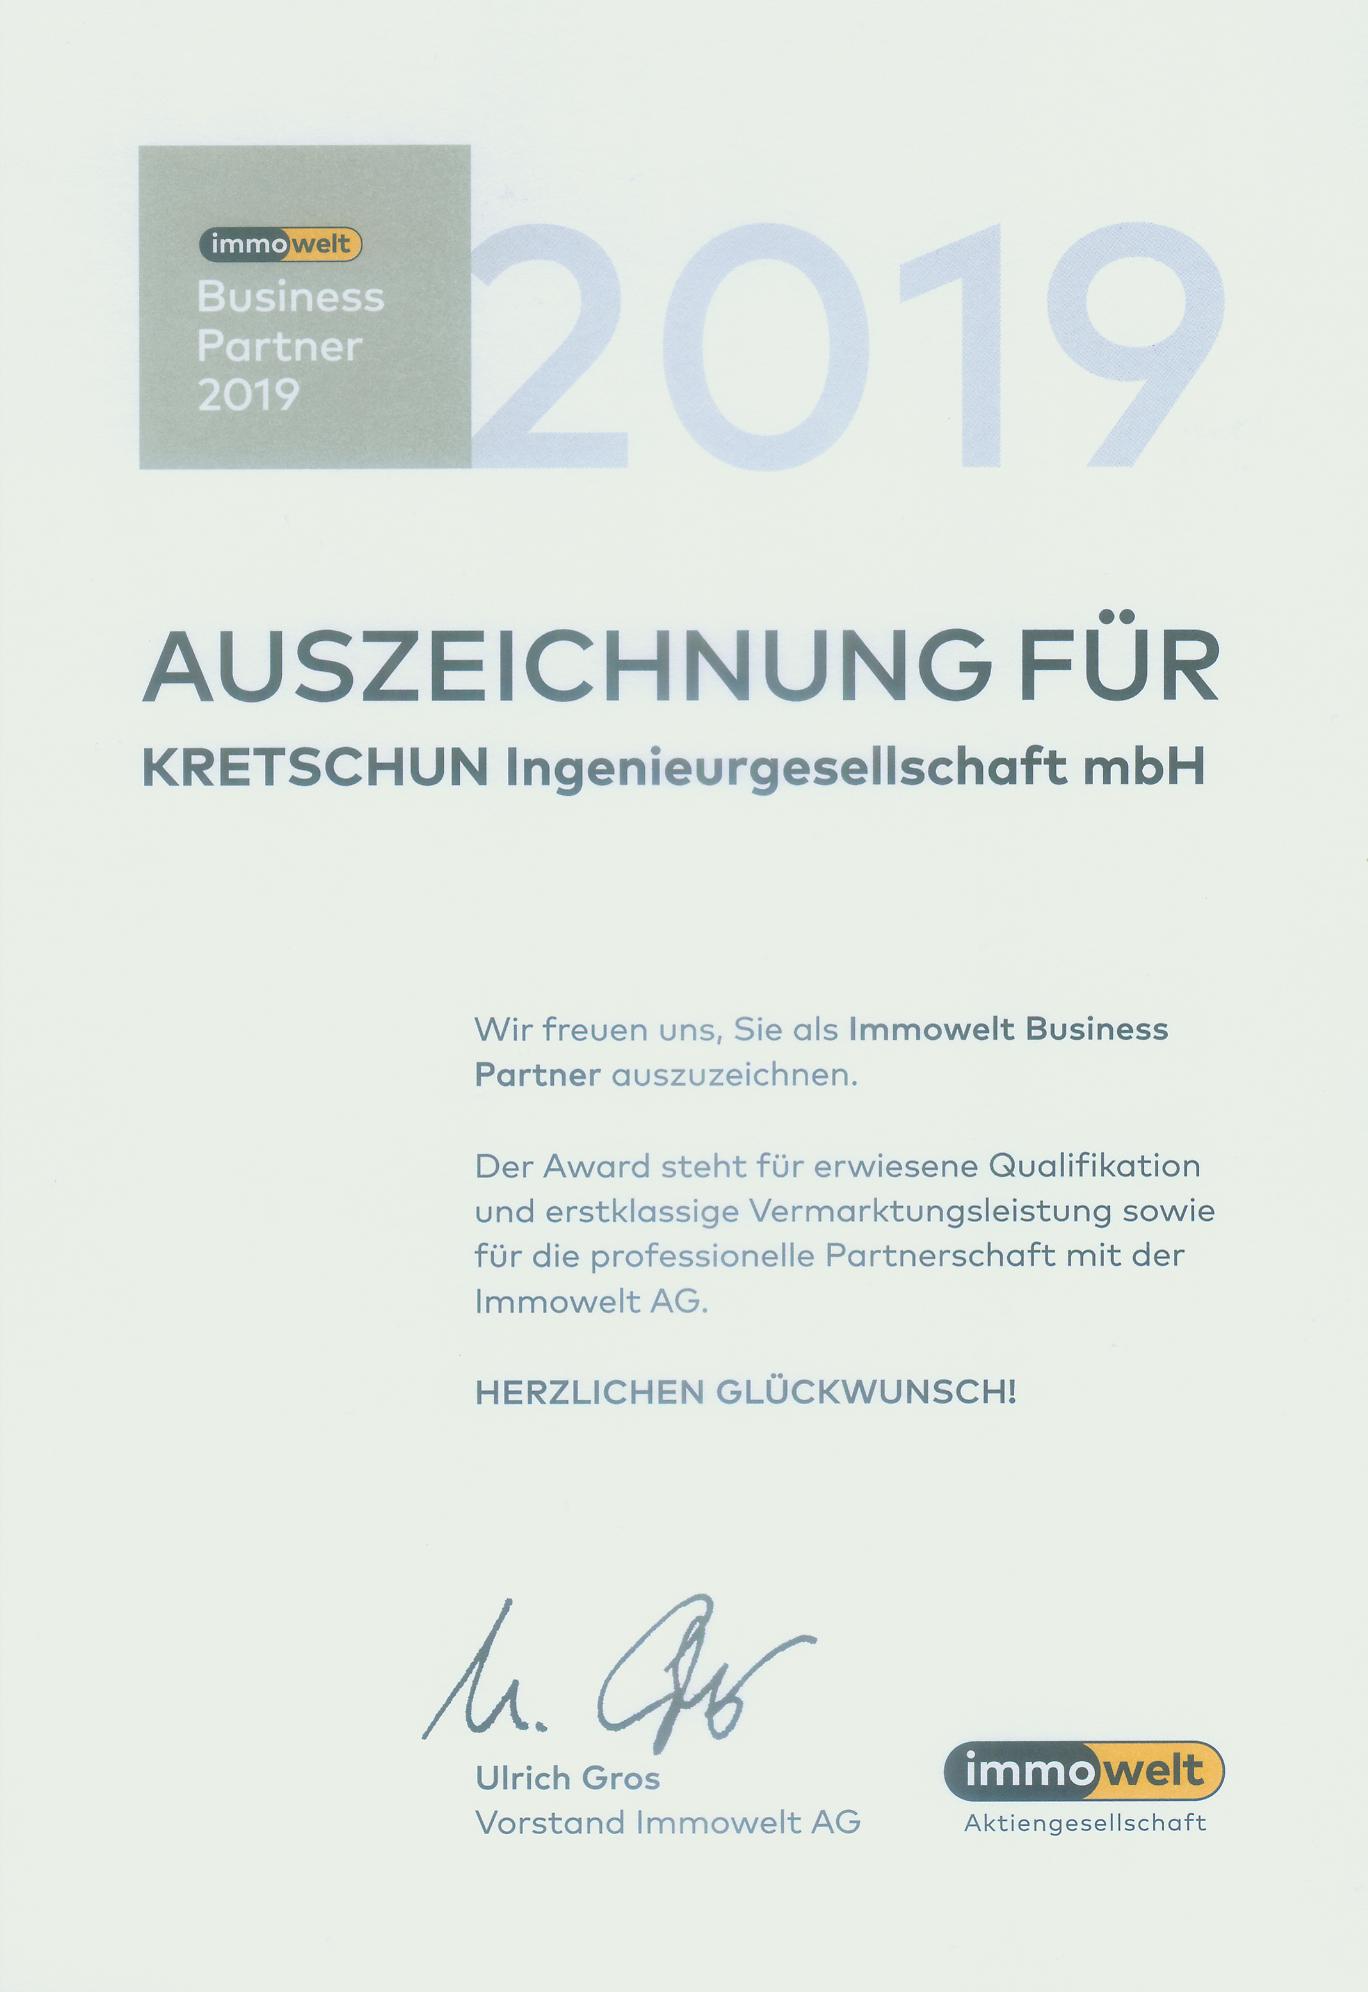 immowelt Business Partner 2019 - Award